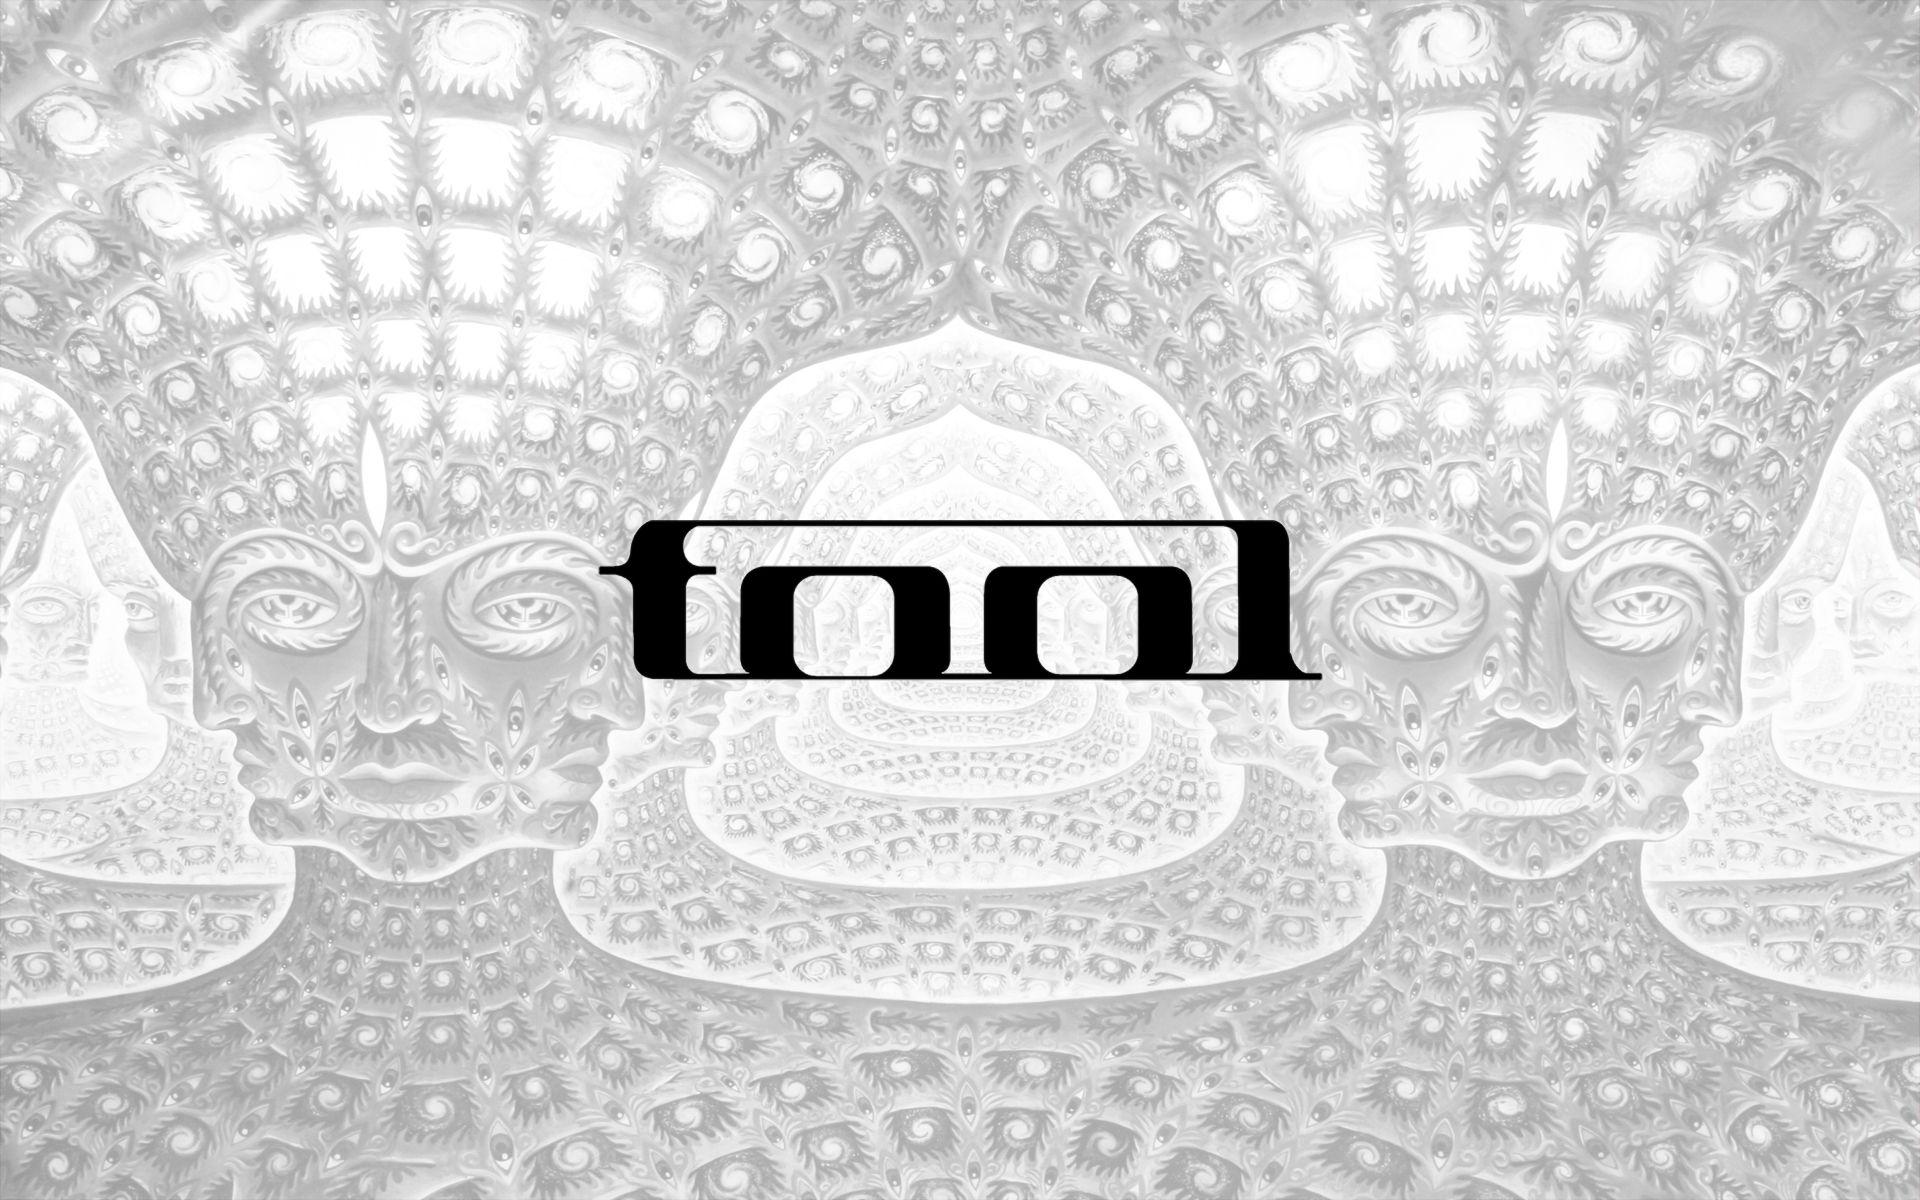 tool music bands #ogL2